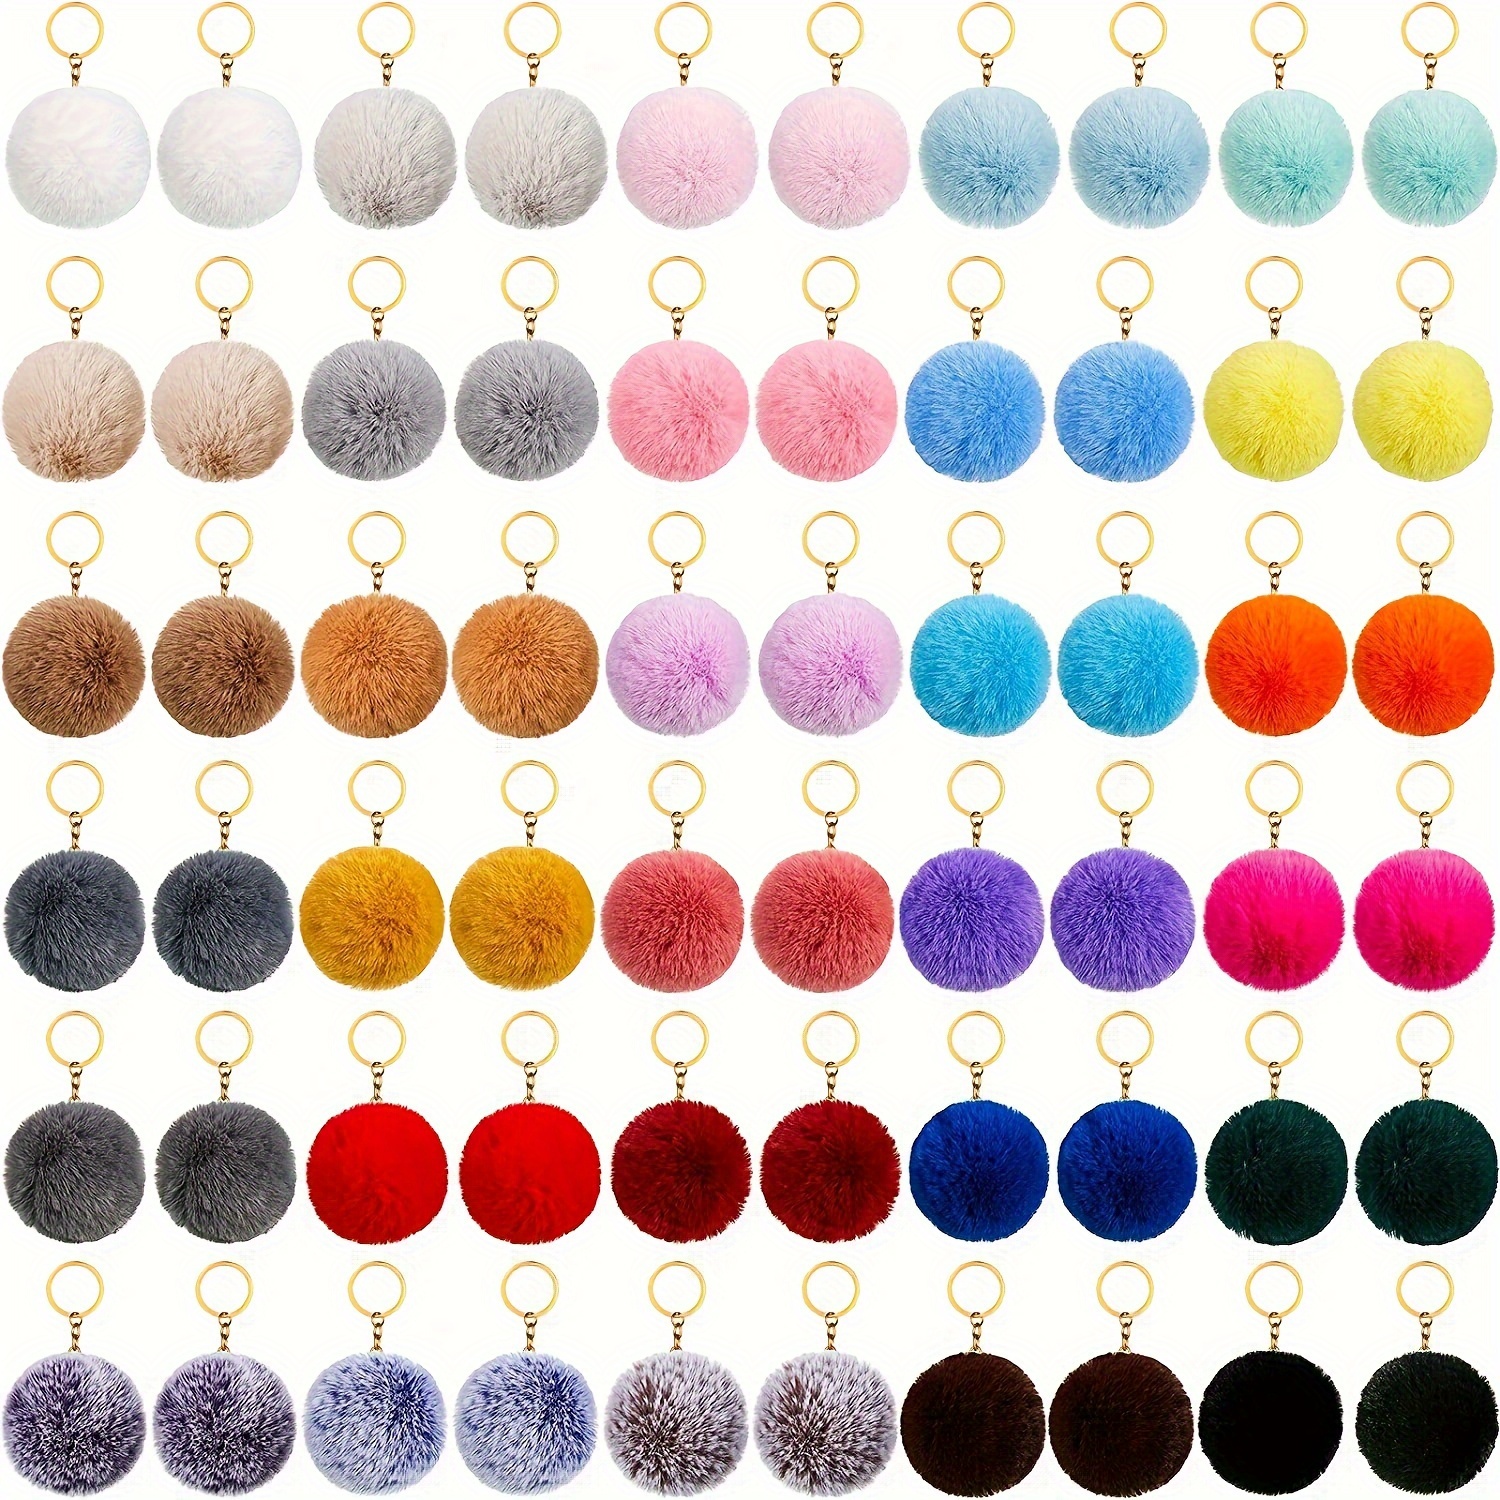 

50pcs Plush Pom-poms With Key Chain, Embryo Fluffy Artificial Fur Pom-pom Keychain Jewelry Accessories, Bag Pendants For Women And Girls